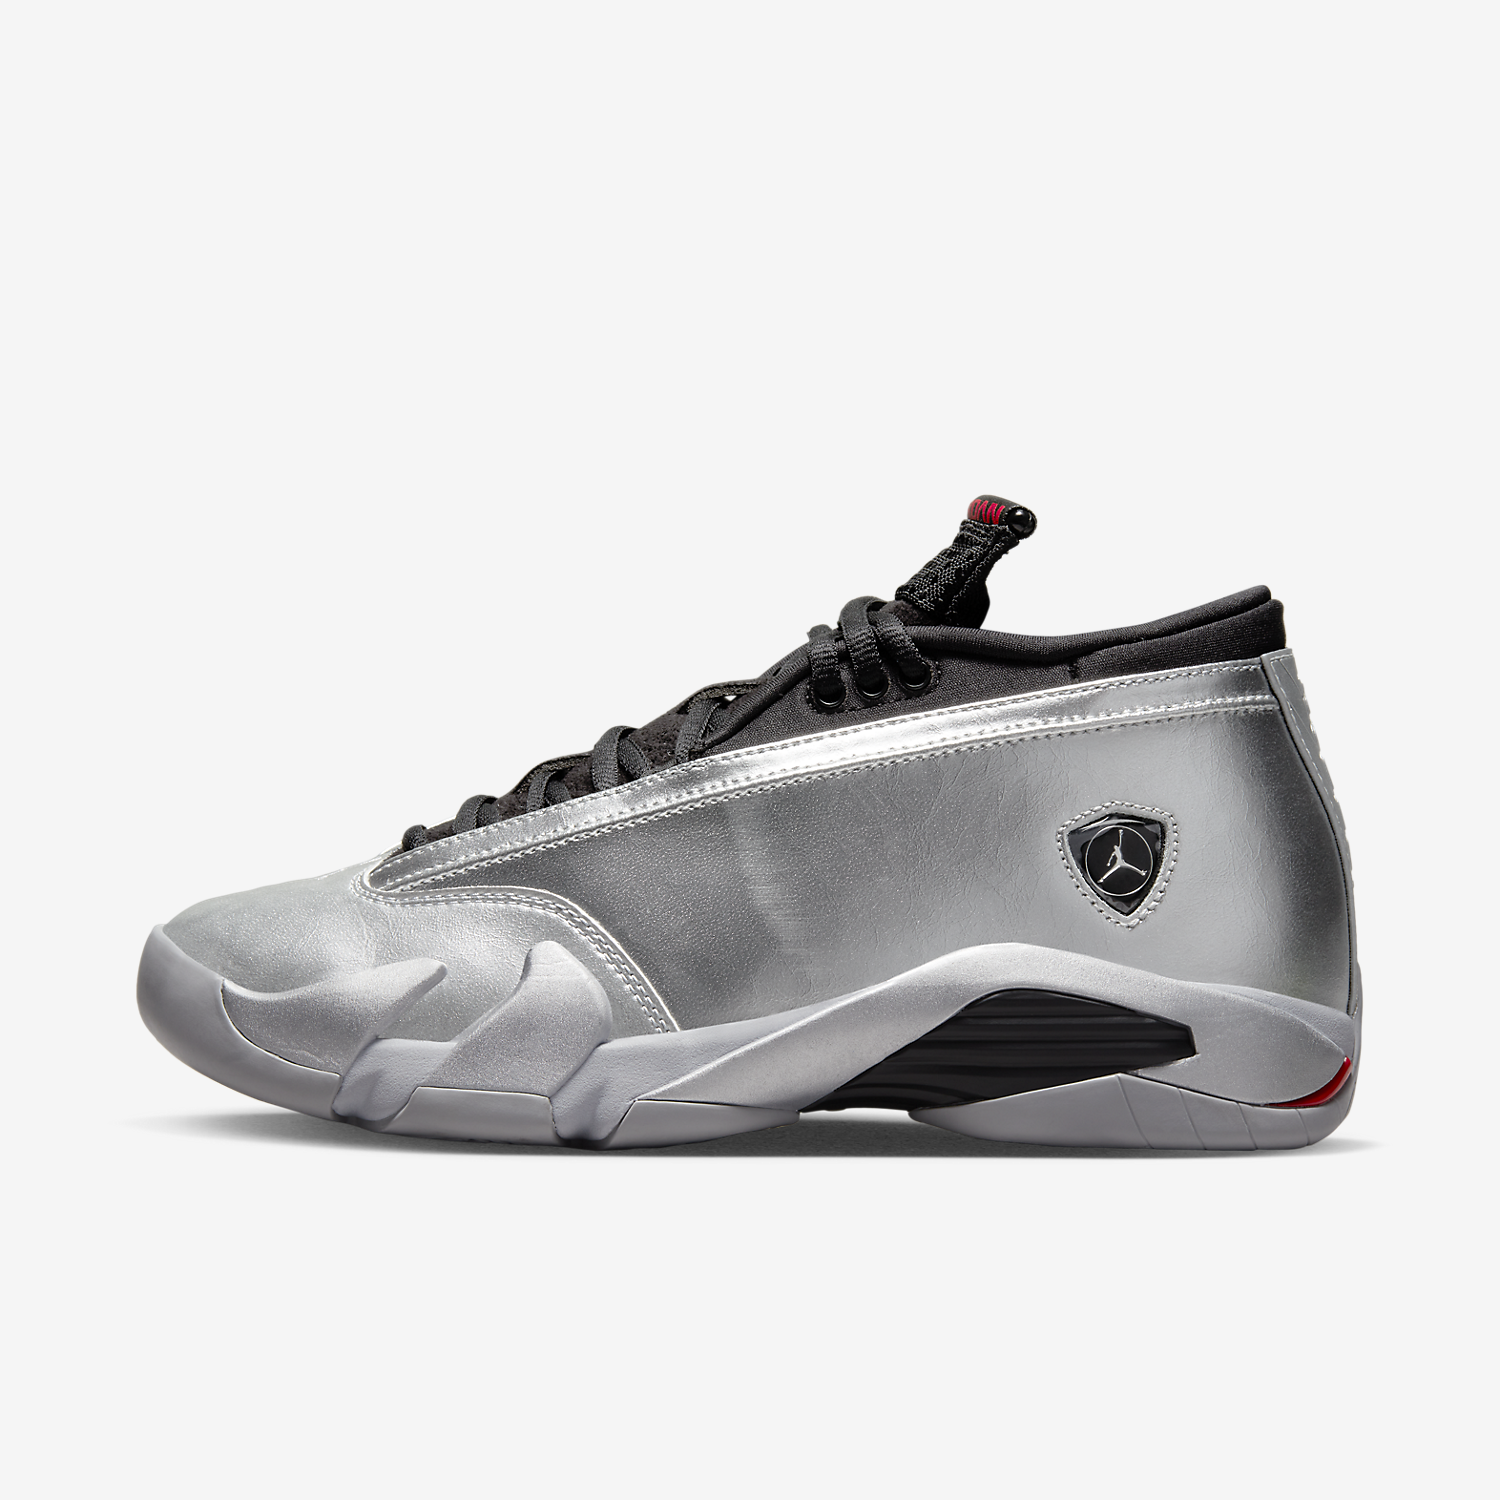 Sneaker Drop — Women's Air Jordan 14 Retro Low 'Metallic Silver'